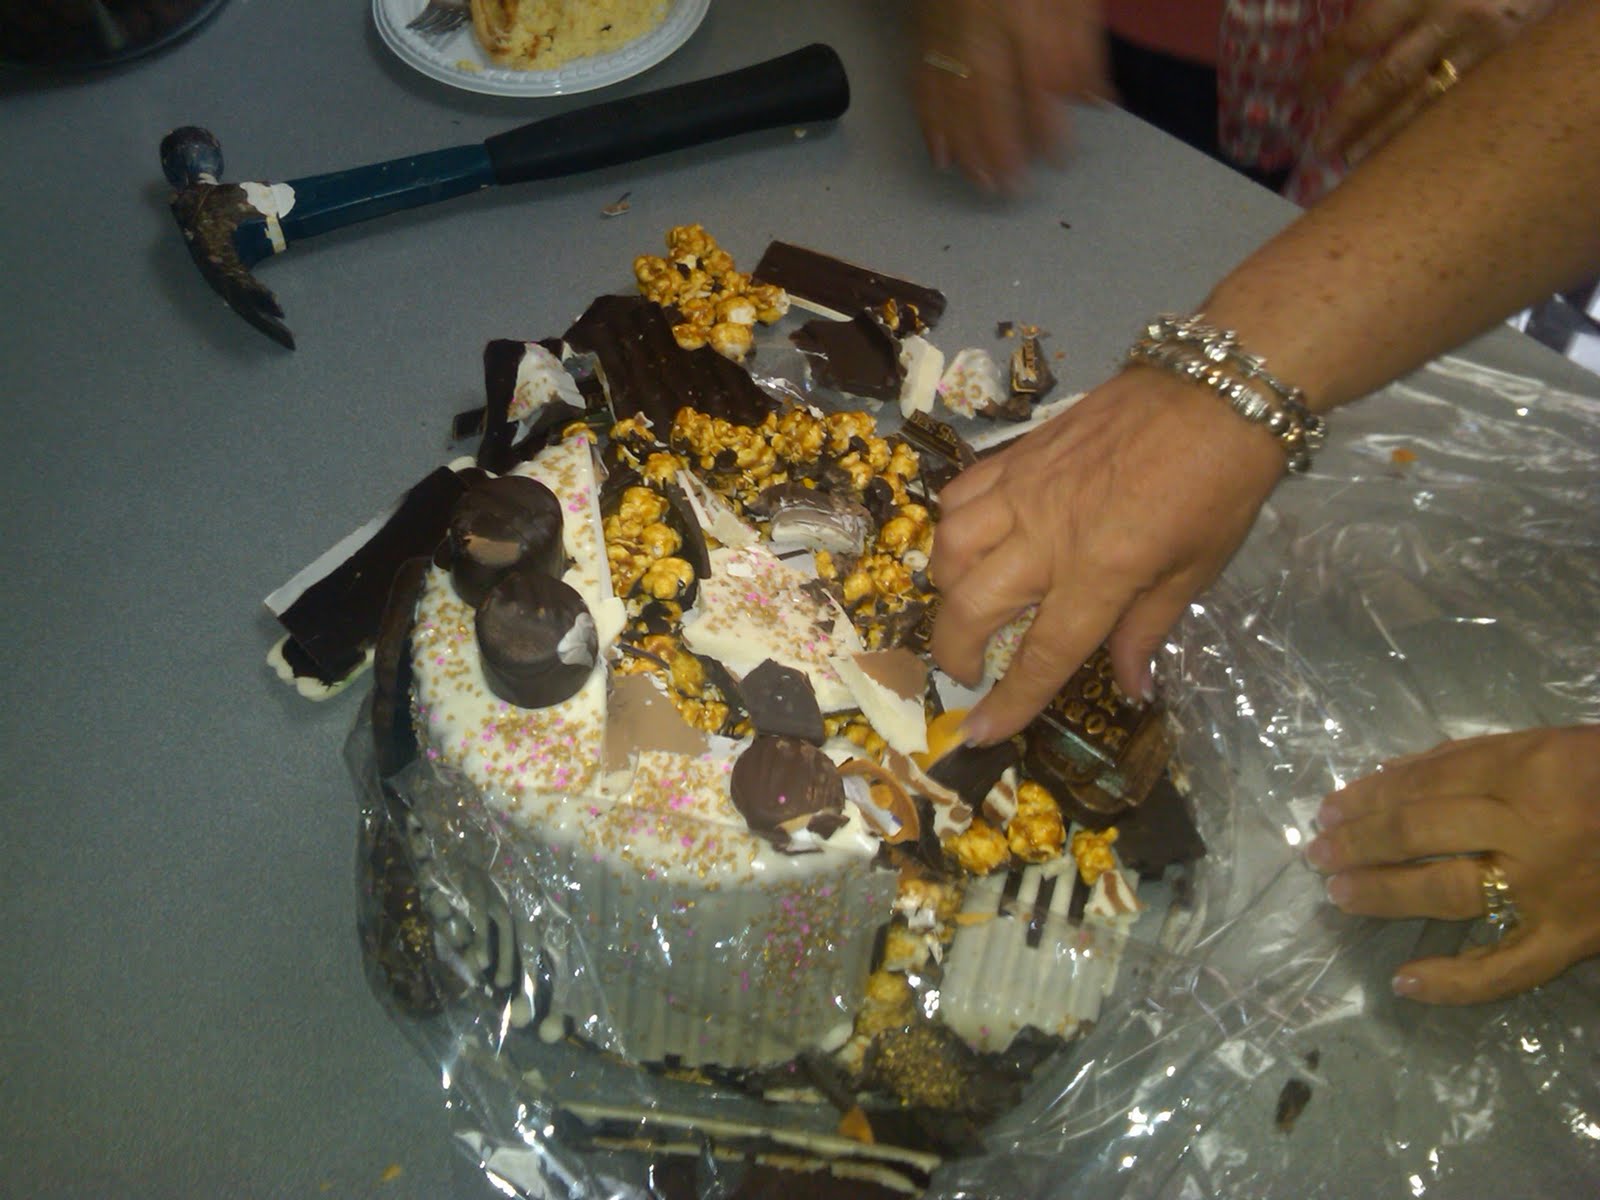 http://3.bp.blogspot.com/-i9FBzZGi1AE/Tbthrur-XHI/AAAAAAAAAZI/hHFB8RkpKlE/s1600/moms+smash+cake+3.jpg